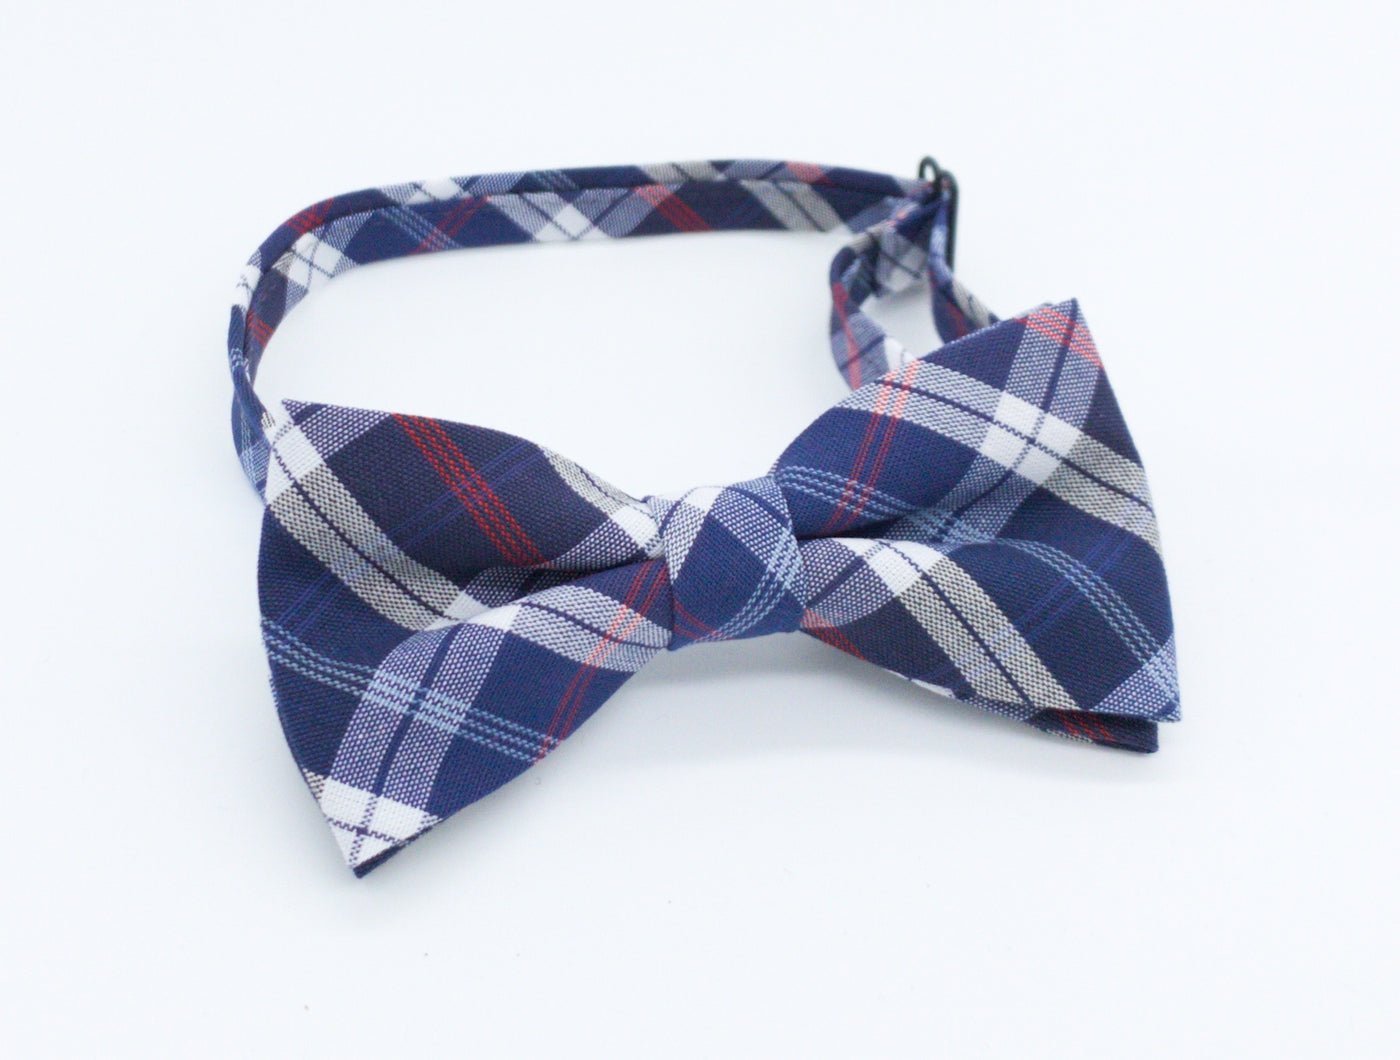 St. Paul tie/bow tie